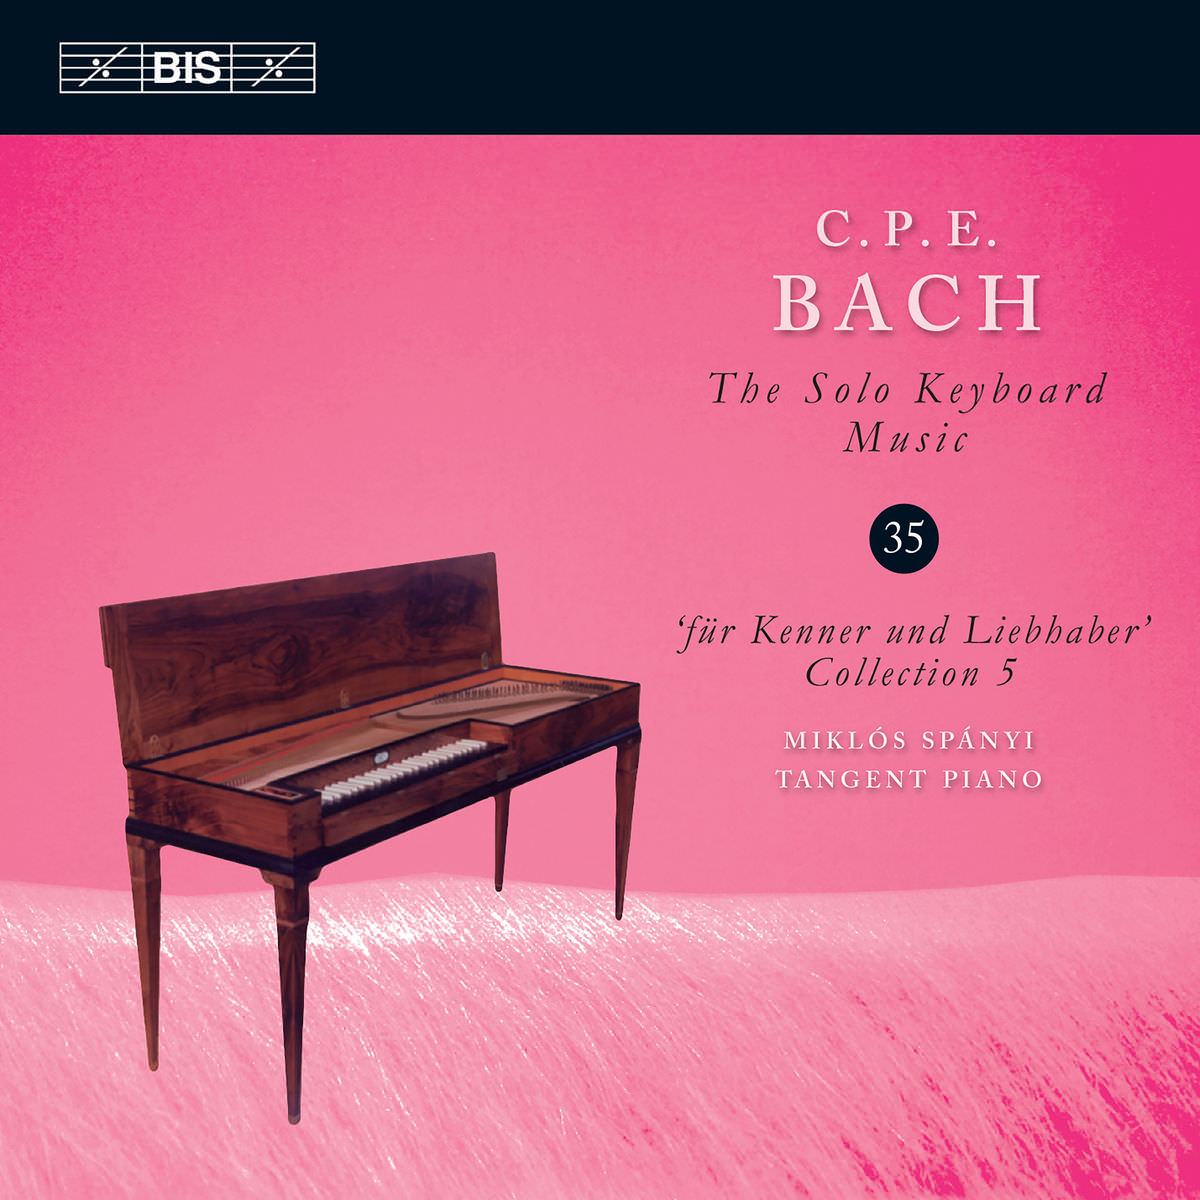 Miklos Spanyi - C.P.E. Bach: The Solo Keyboard Music, Vol. 35 (2018) [FLAC 24bit/96kHz]